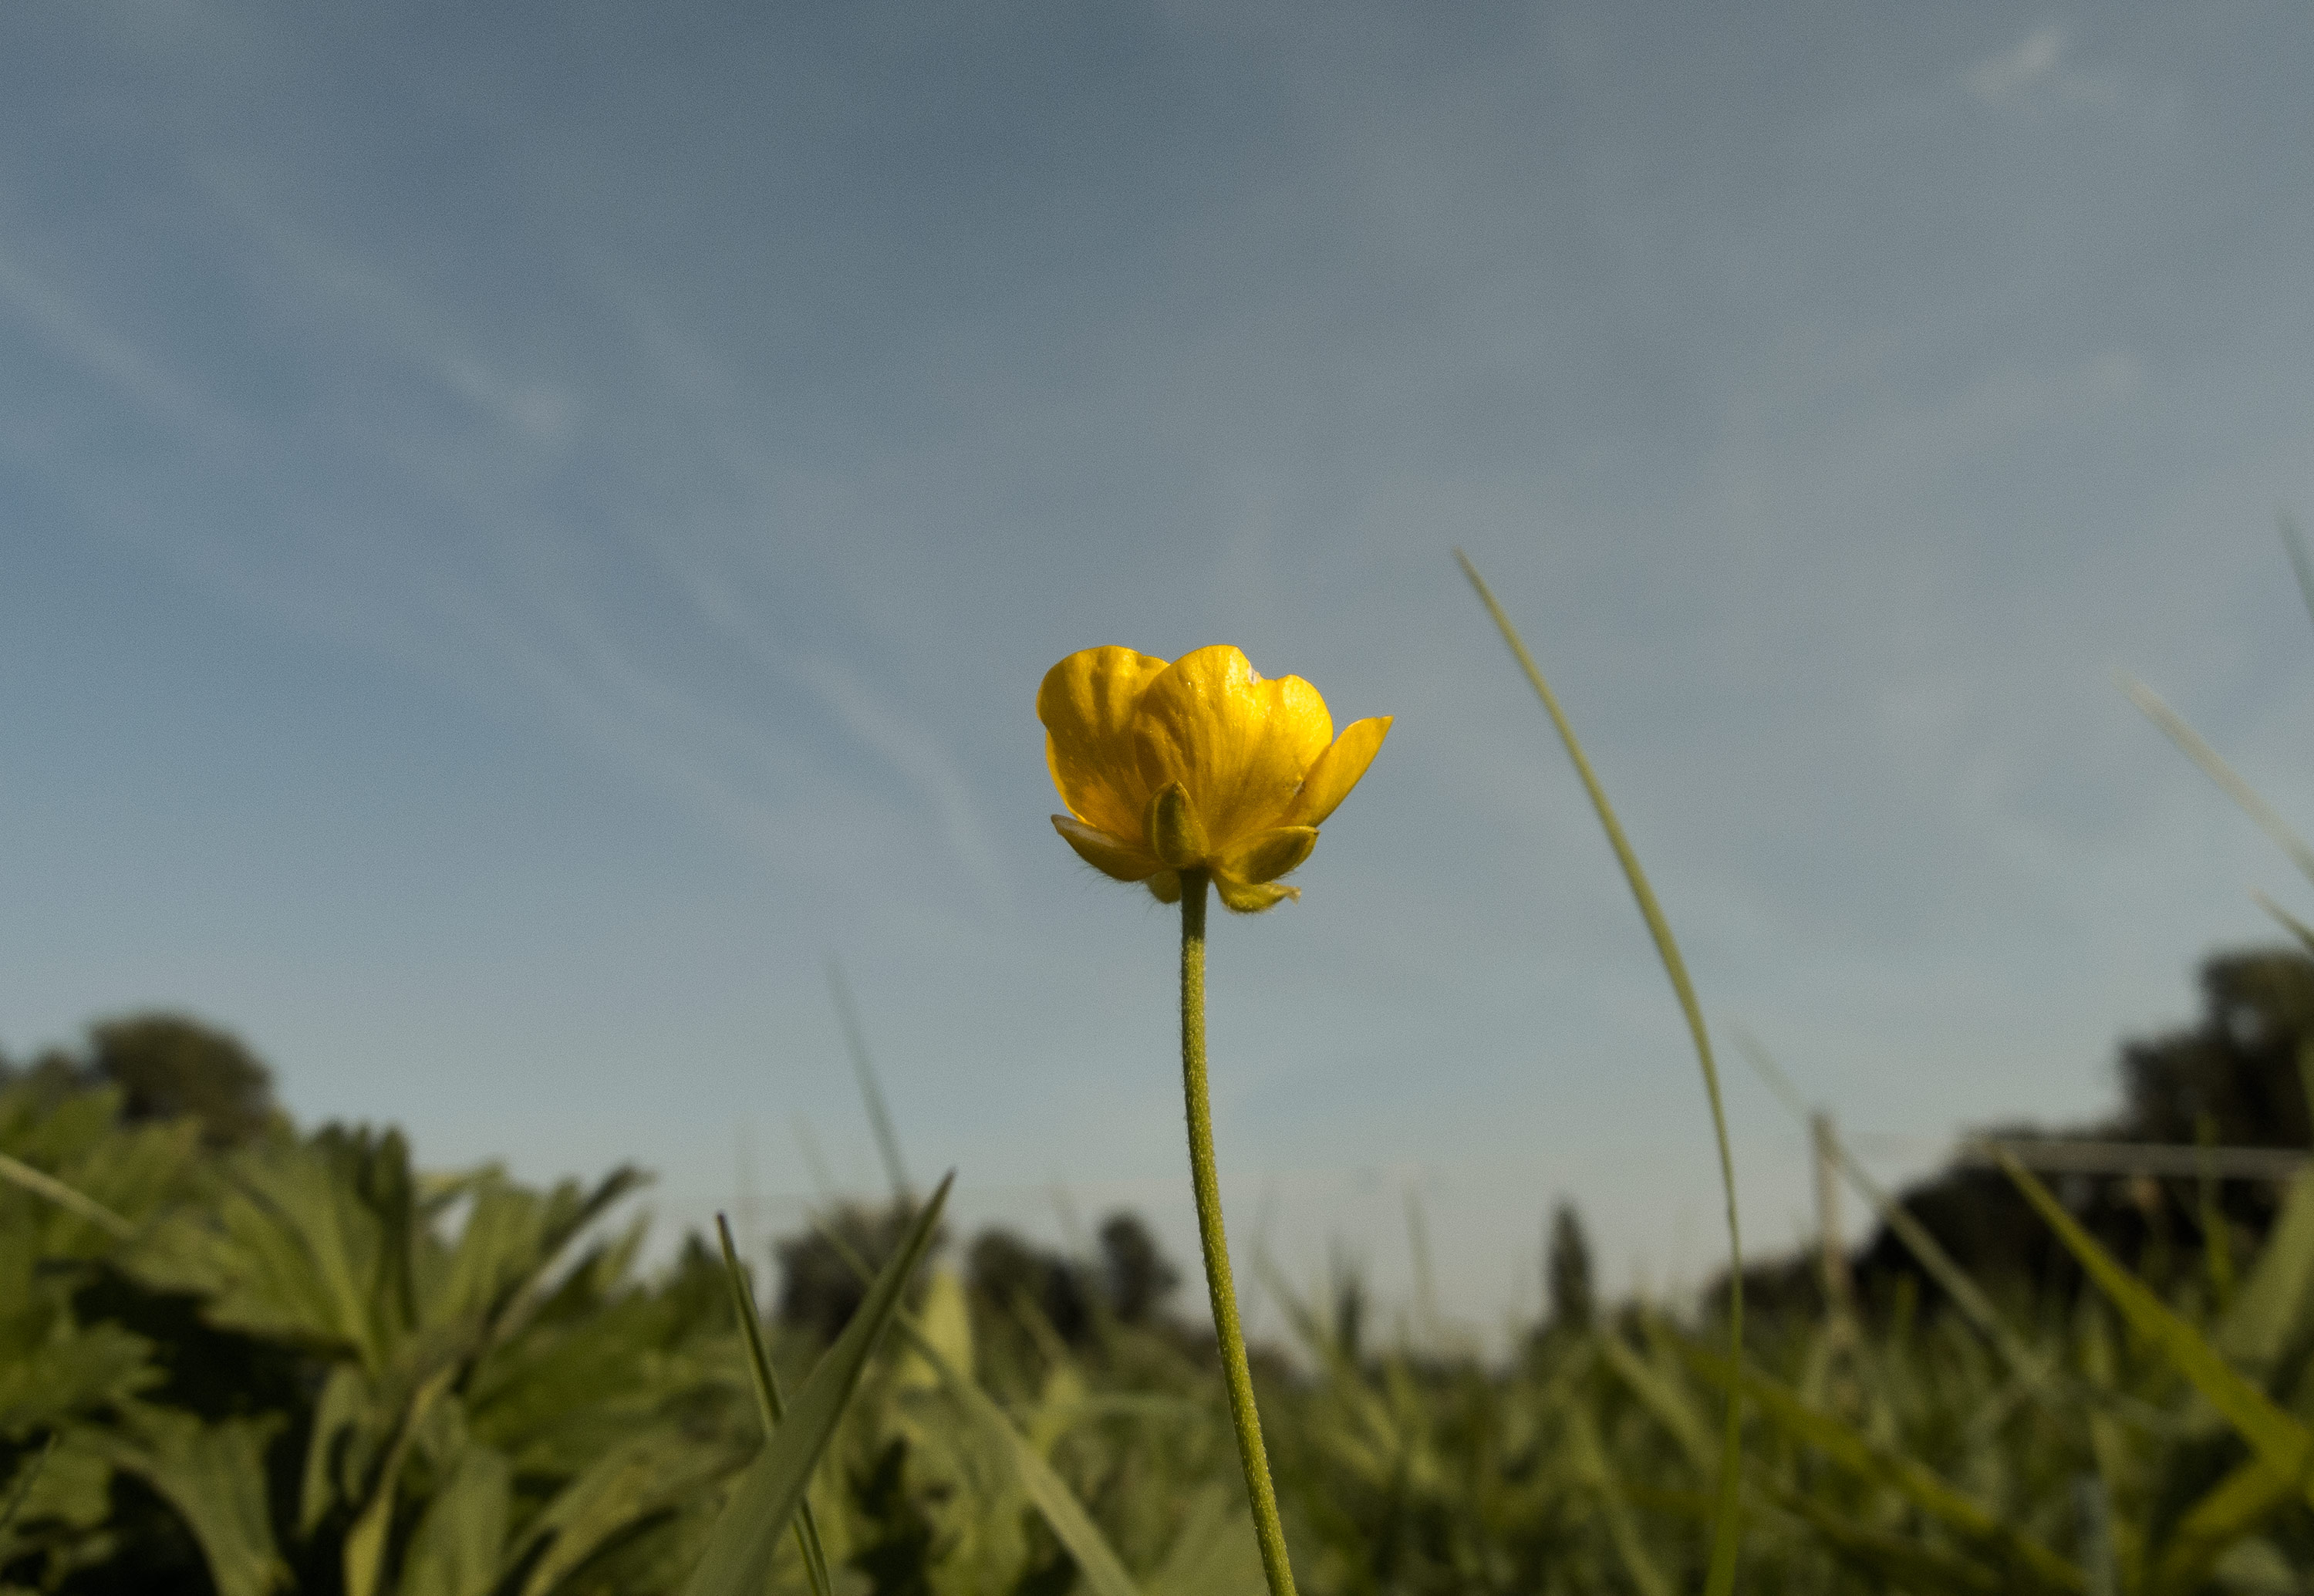 Free Image: Solitary Yellow Flower | Libreshot Public Domain Photos